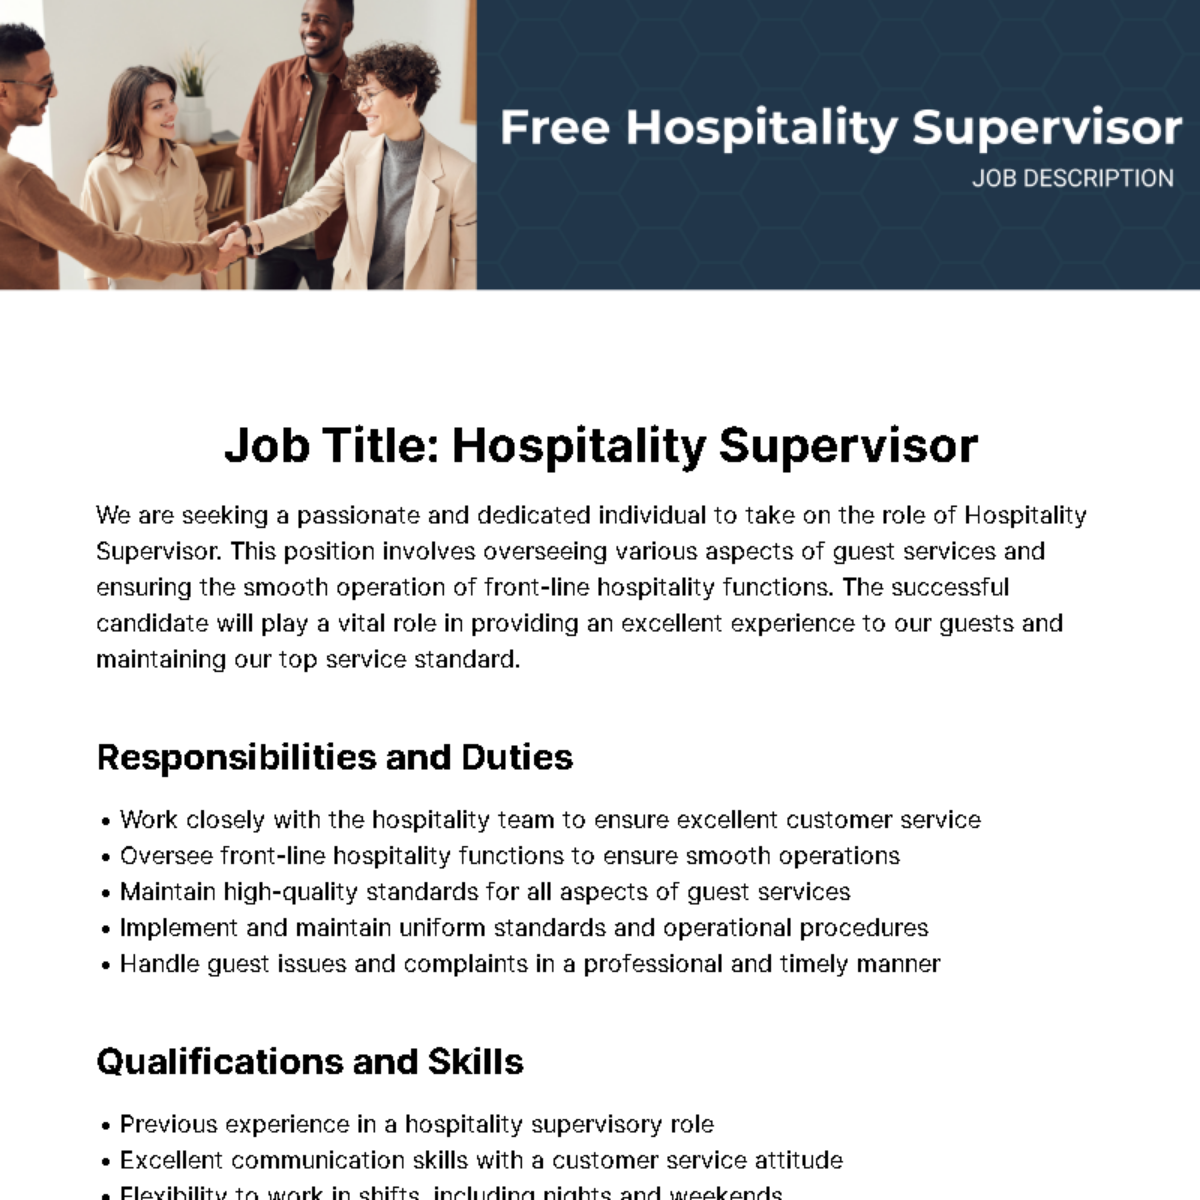 Free Hospitality Supervisor Job Description Template